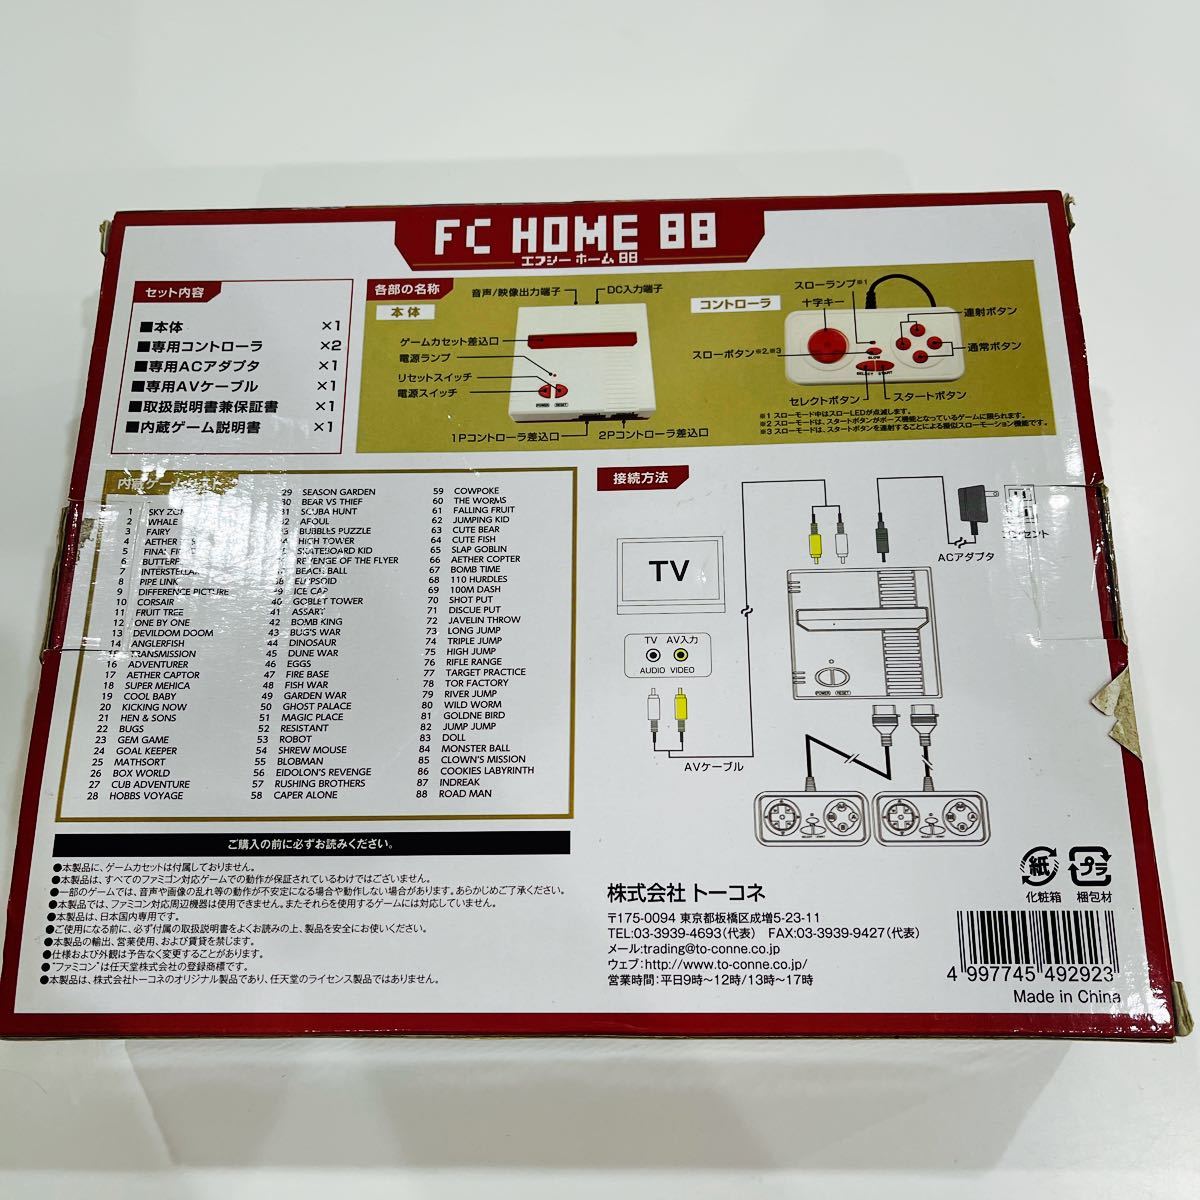 FC HOME88 エフシーホーム88 Home ファミコン互換機